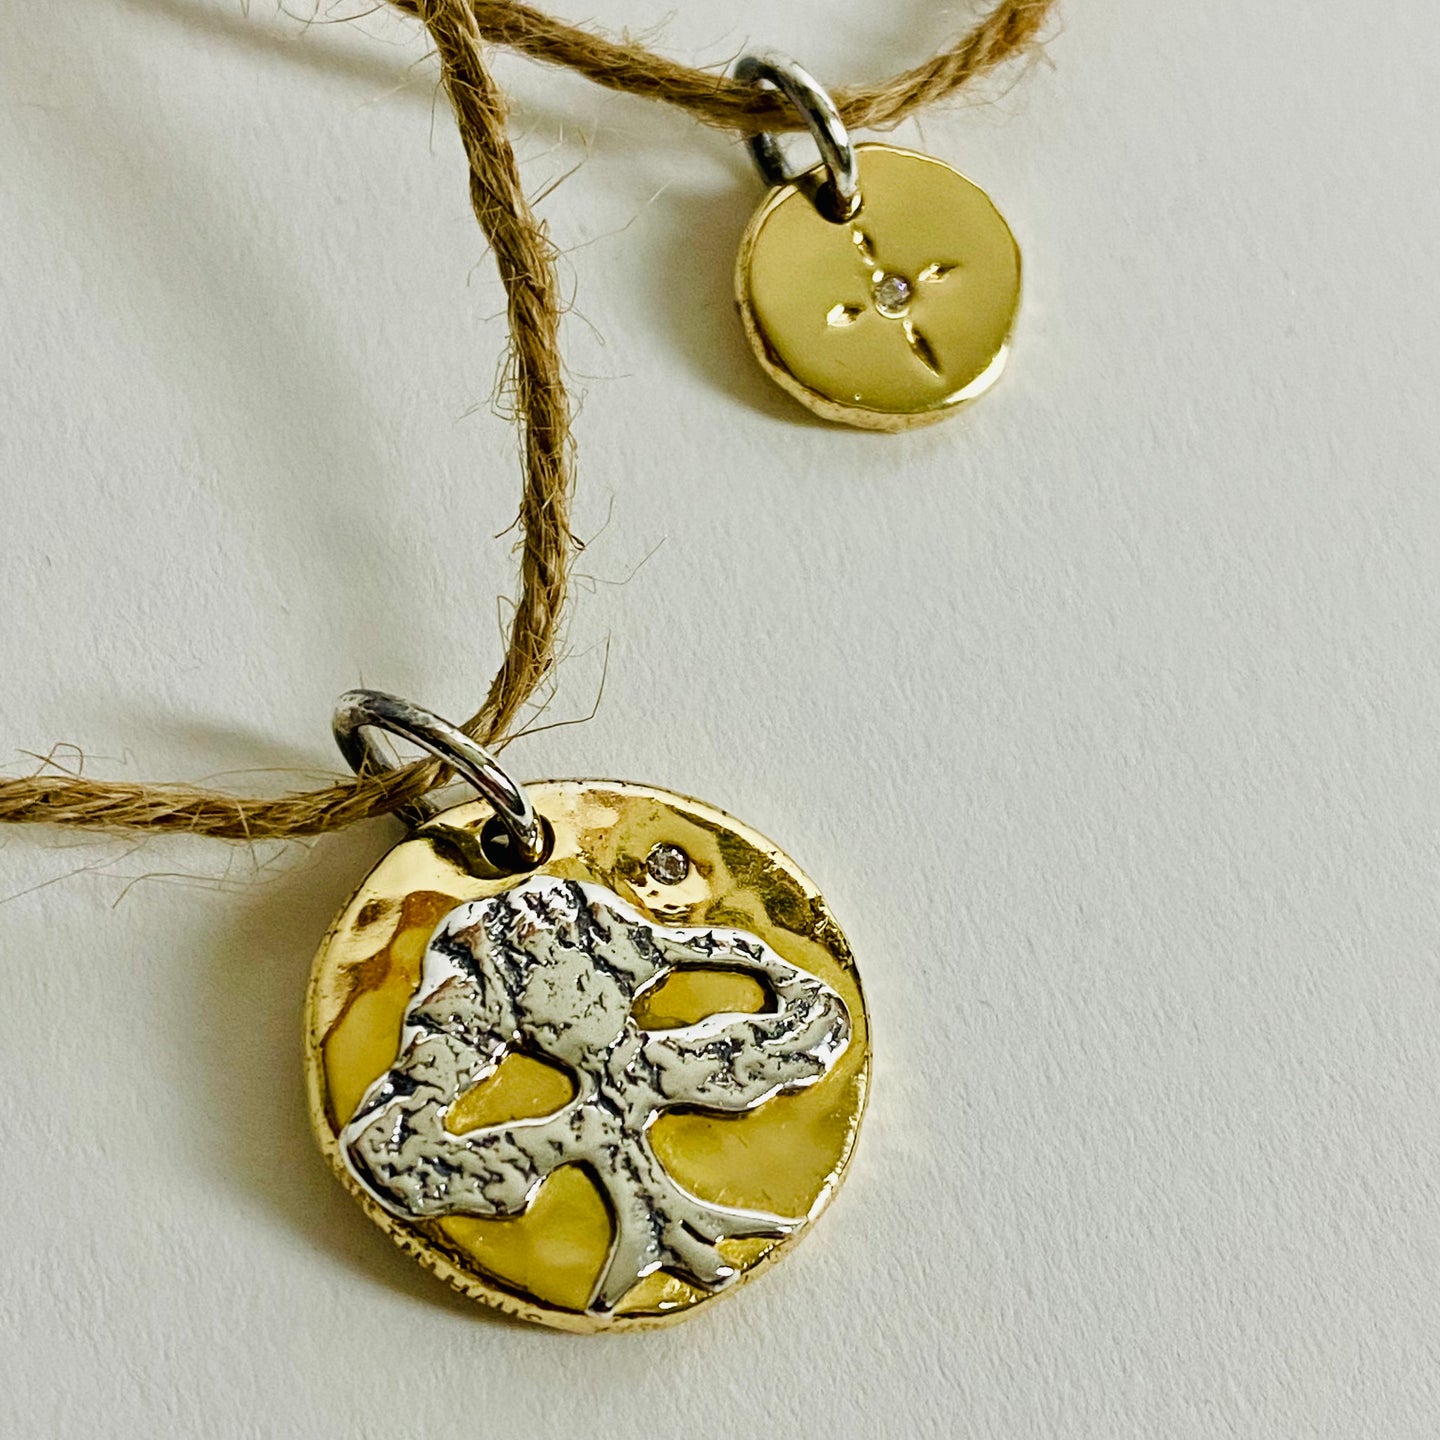 18K Gold Diamond Pendants - Upcycled Jewelry Initiative by TIN HAUS